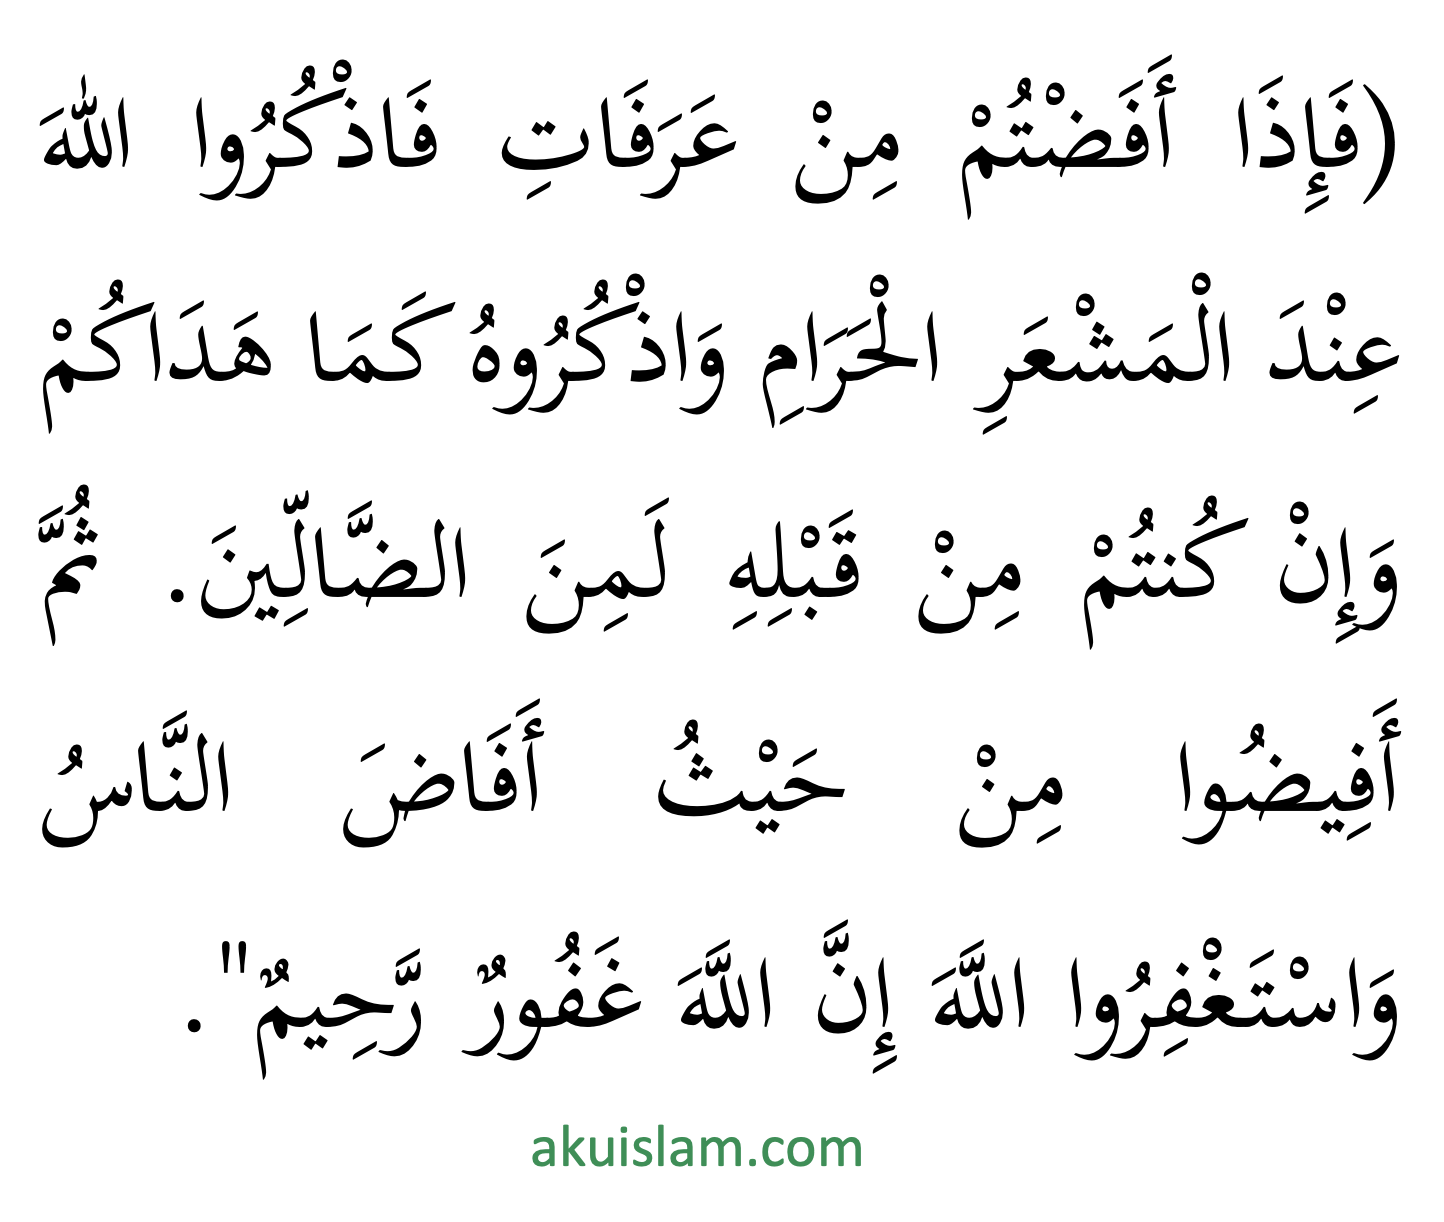 Doa Di Muzdalifah & Mina (Transliterasi Rumi)